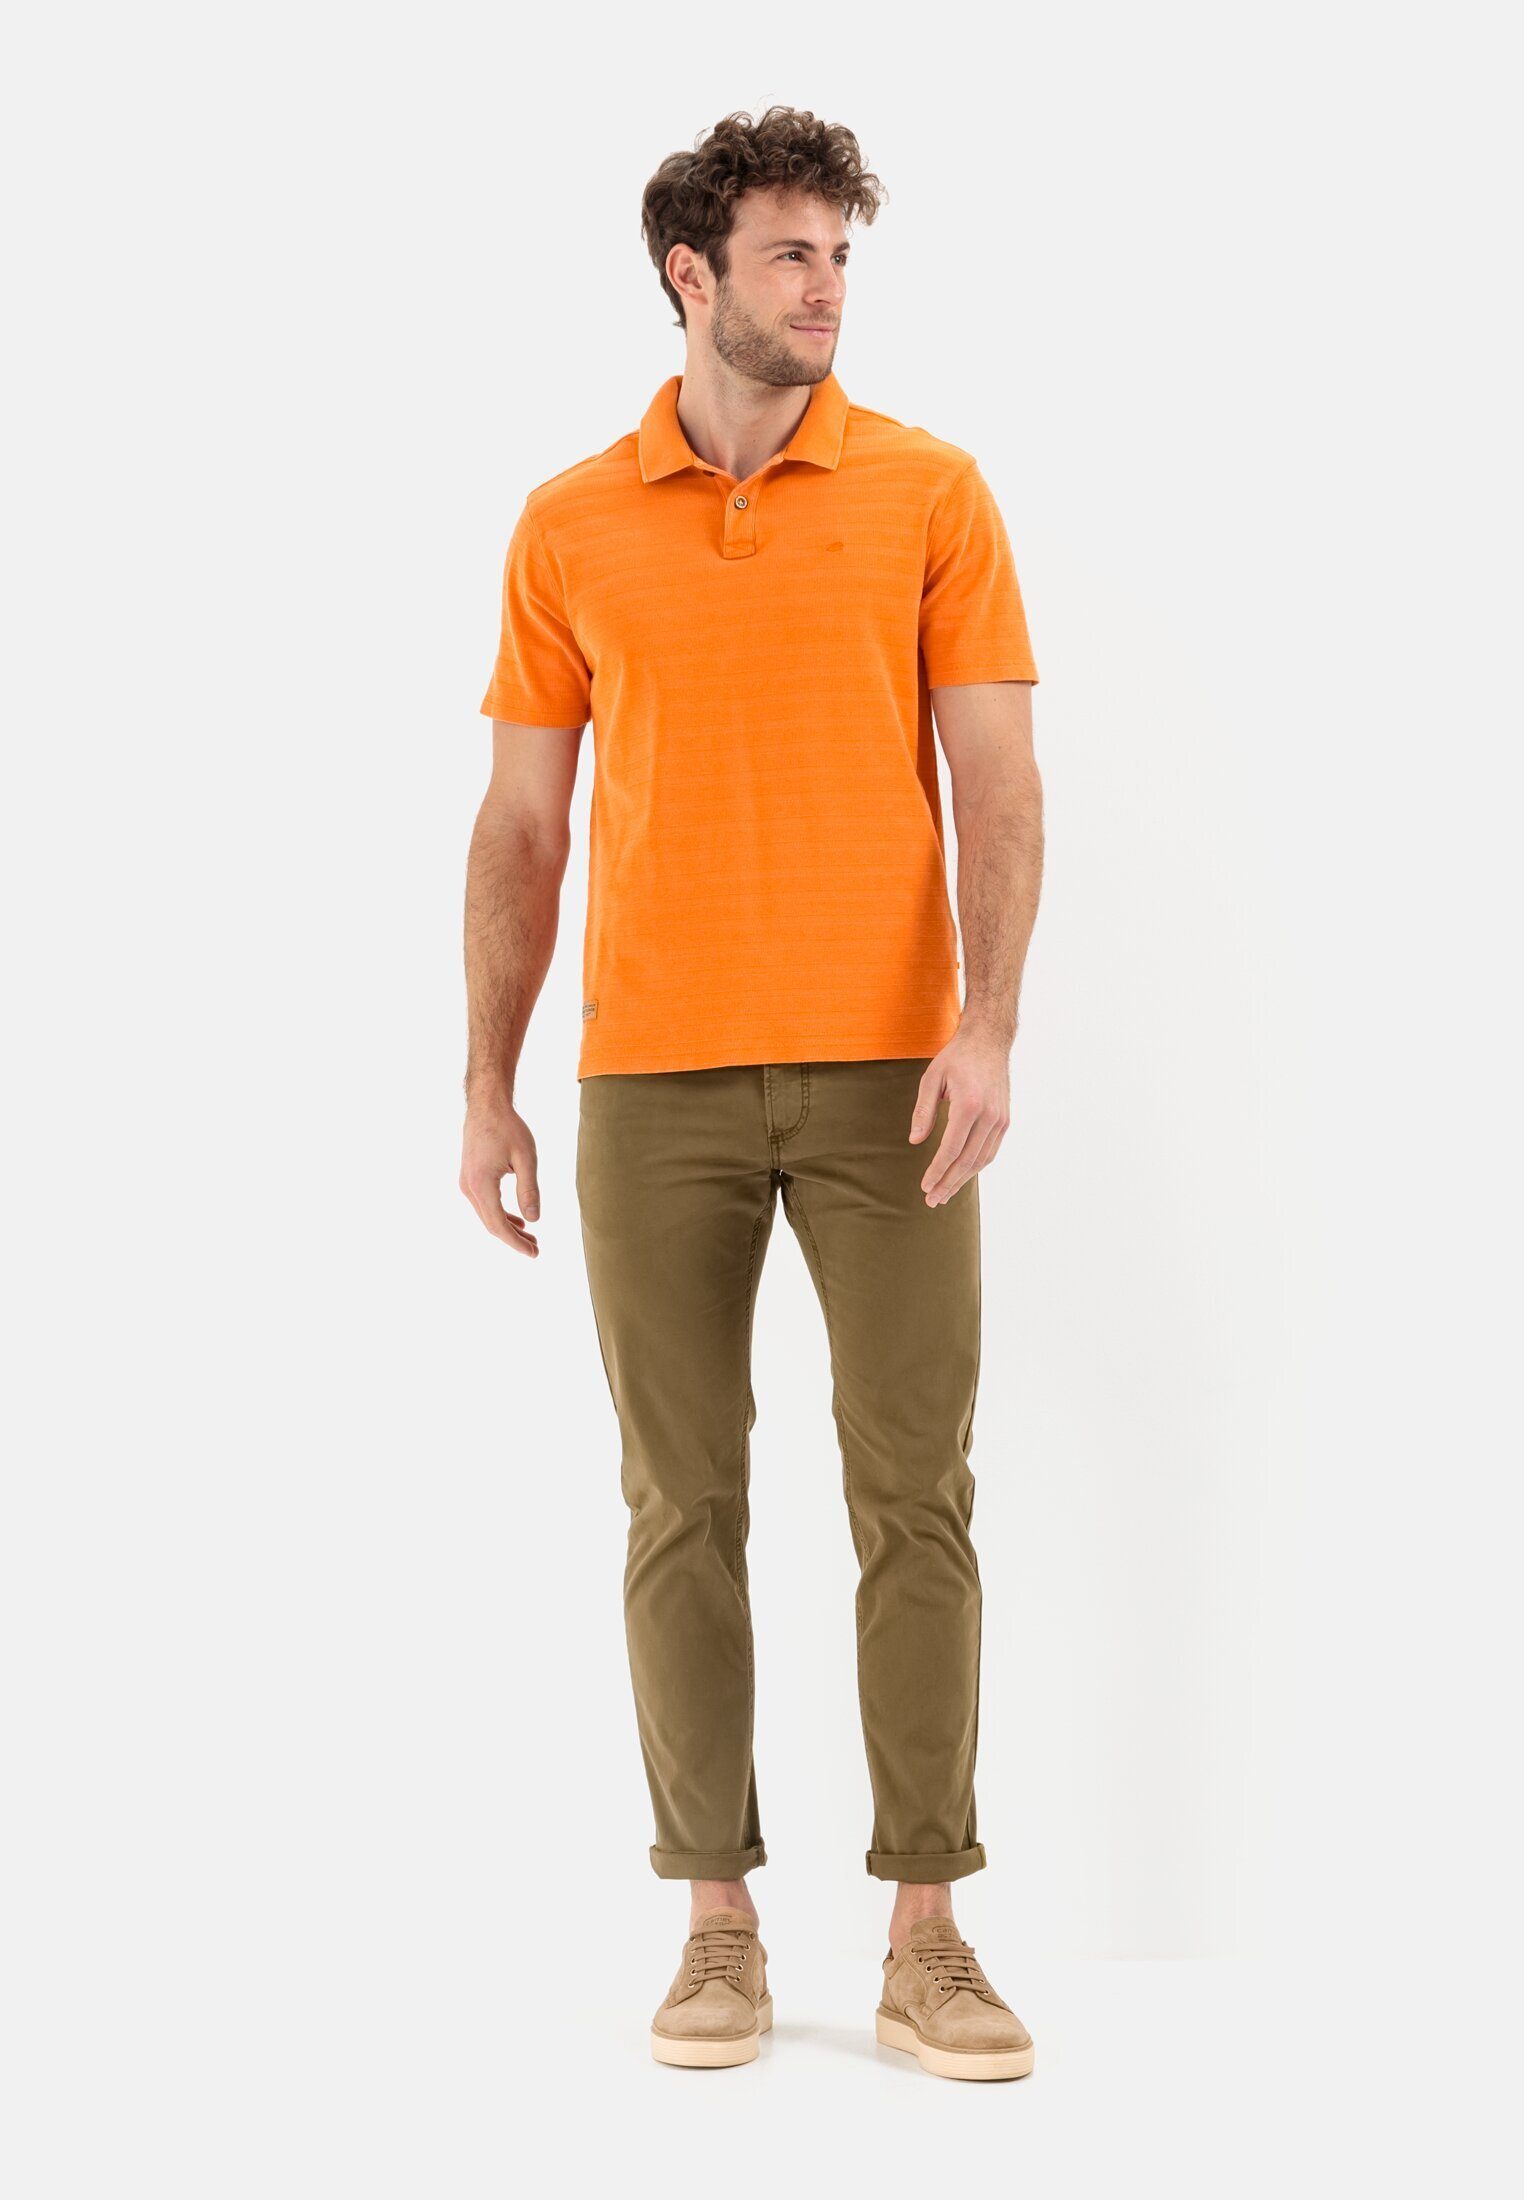 tonalen im active Poloshirt Shirts_Poloshirt camel Orange Streifenmuster